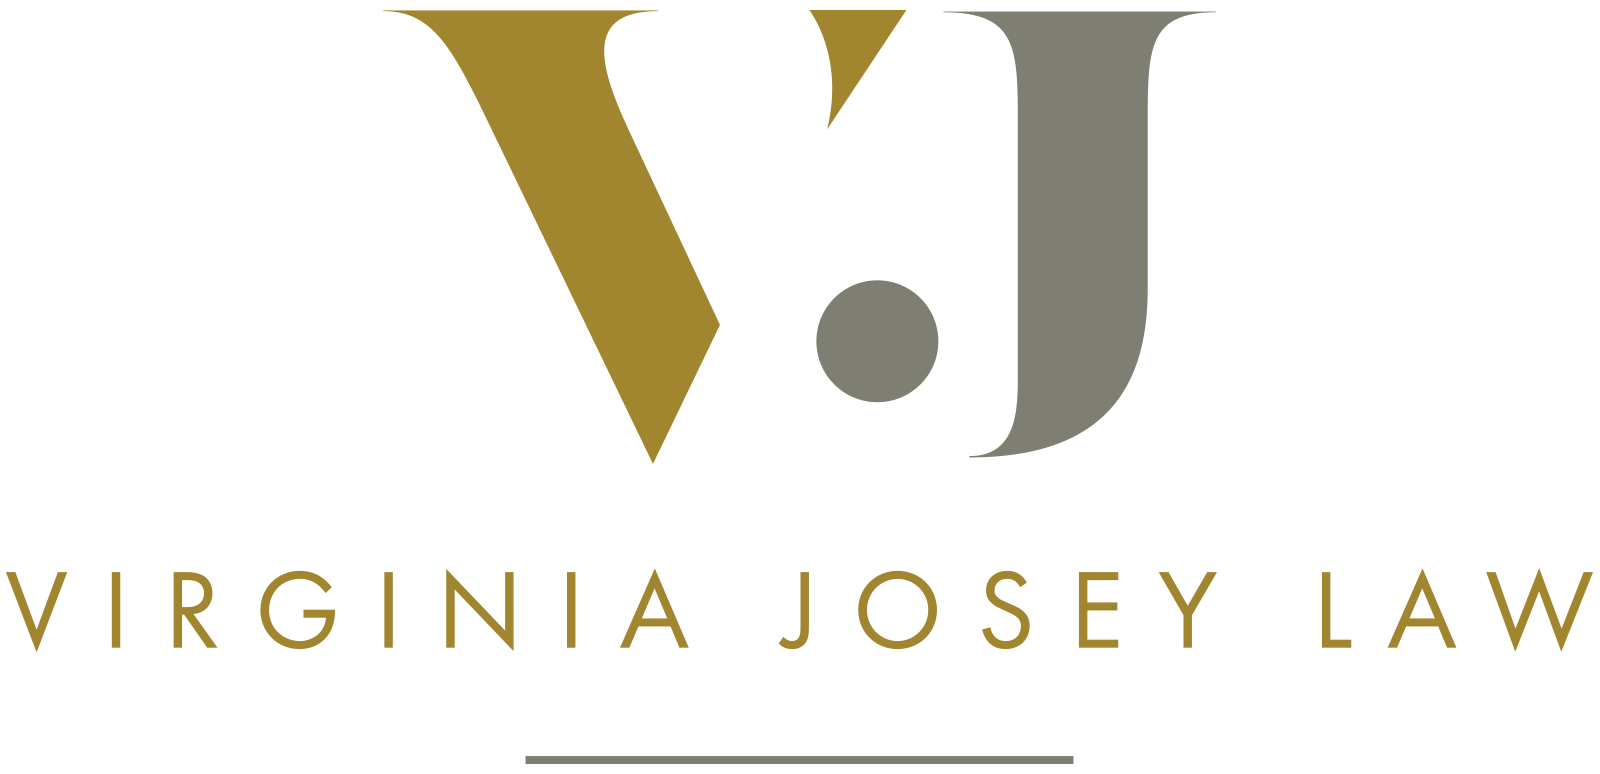 Virginia Josey Law logo